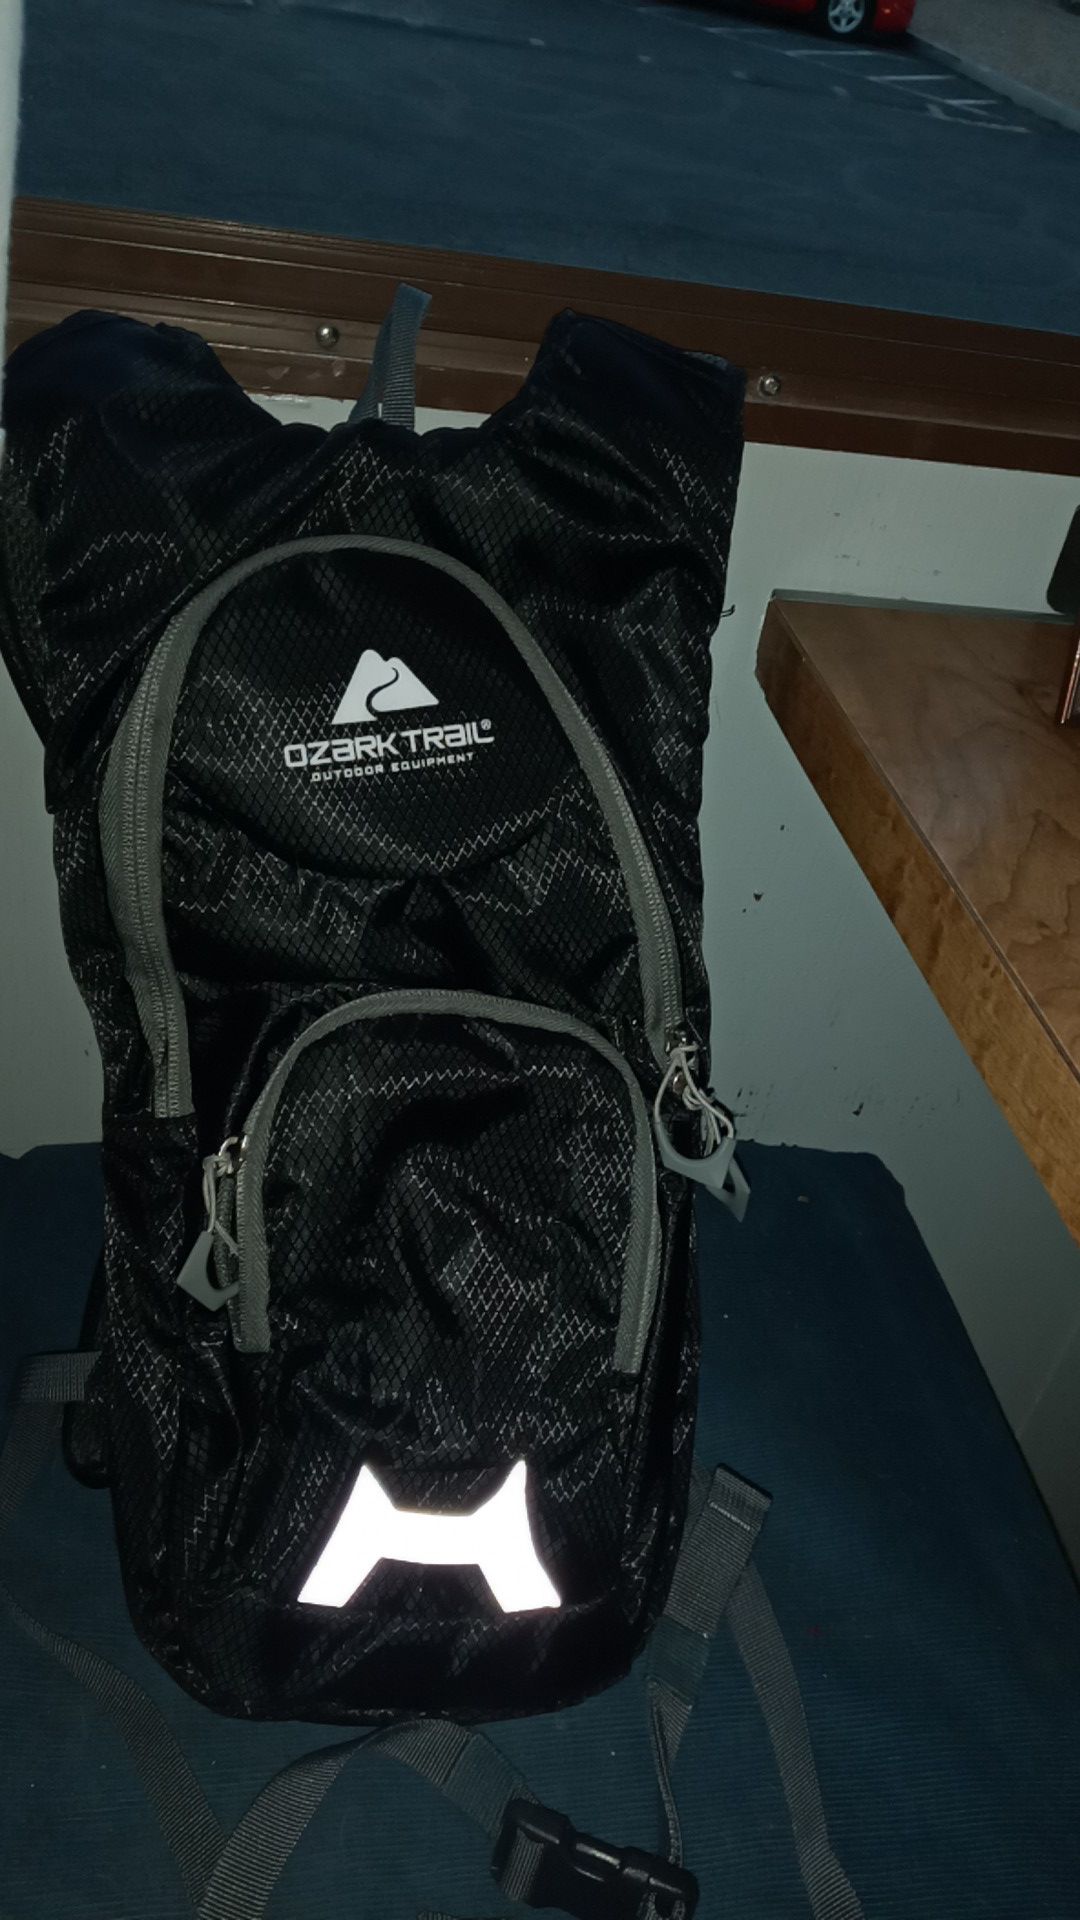 Ozark Trail waterbottle backpack